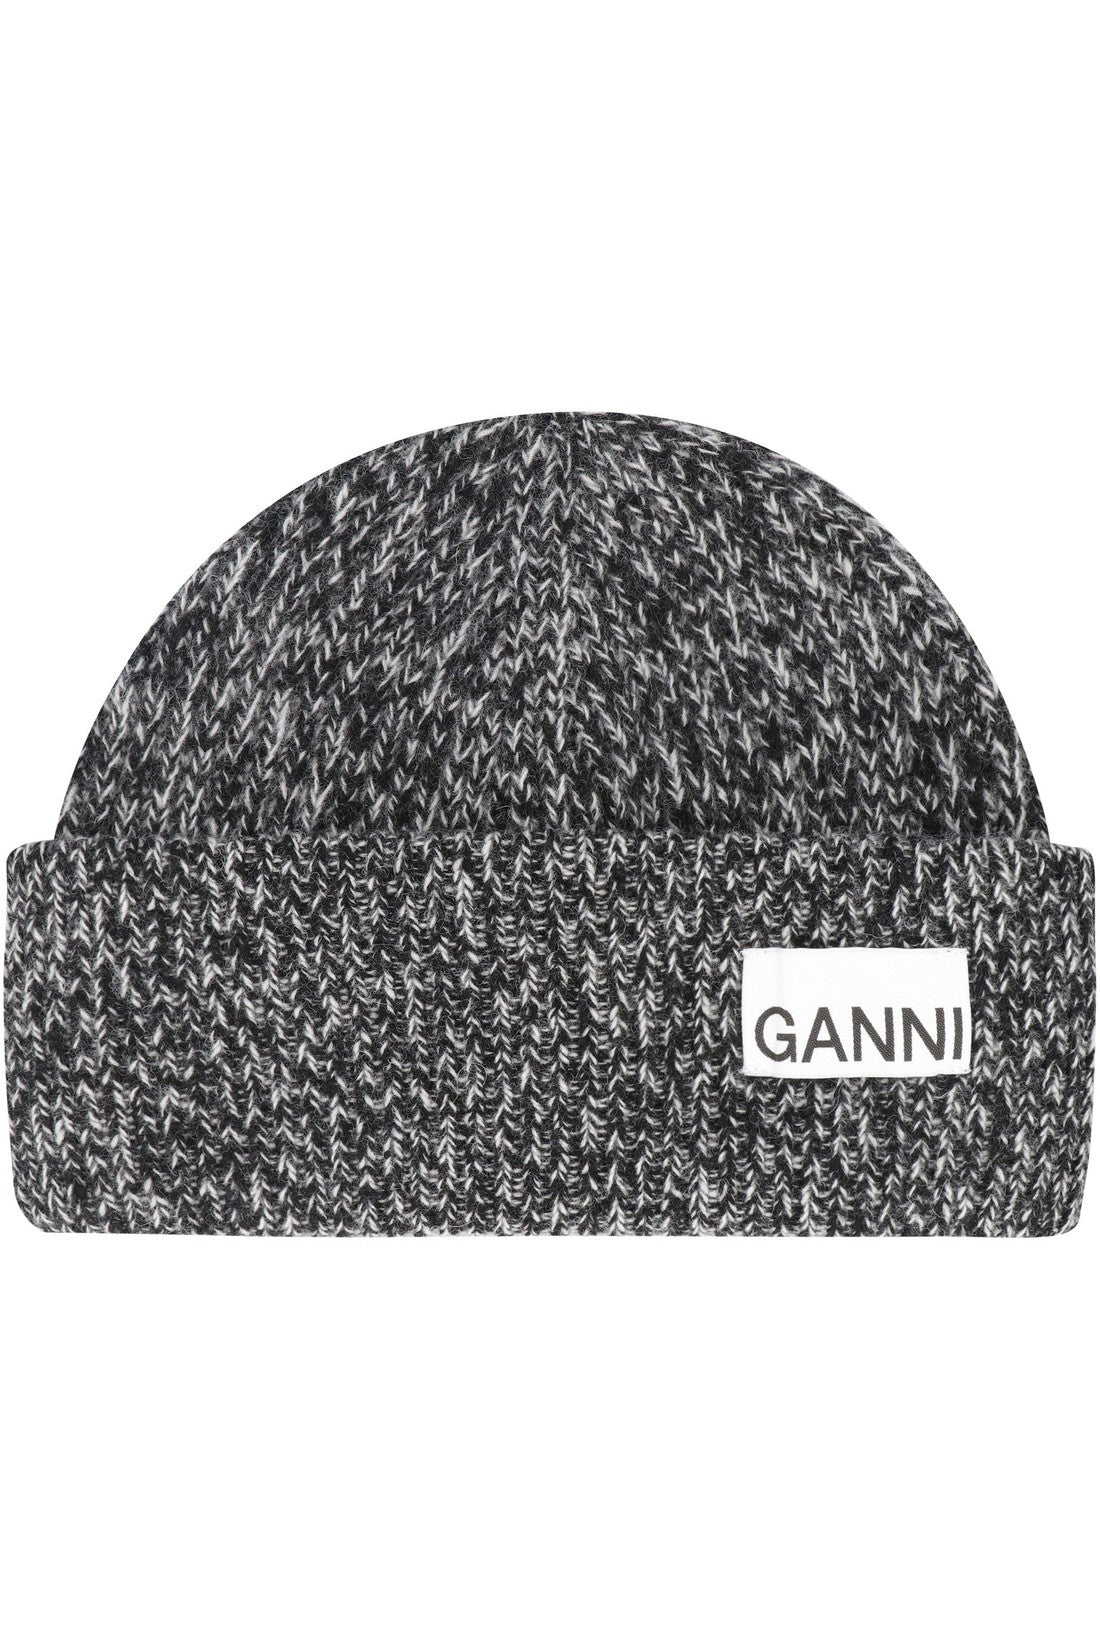 GANNI-OUTLET-SALE-Ribbed knit beanie-ARCHIVIST